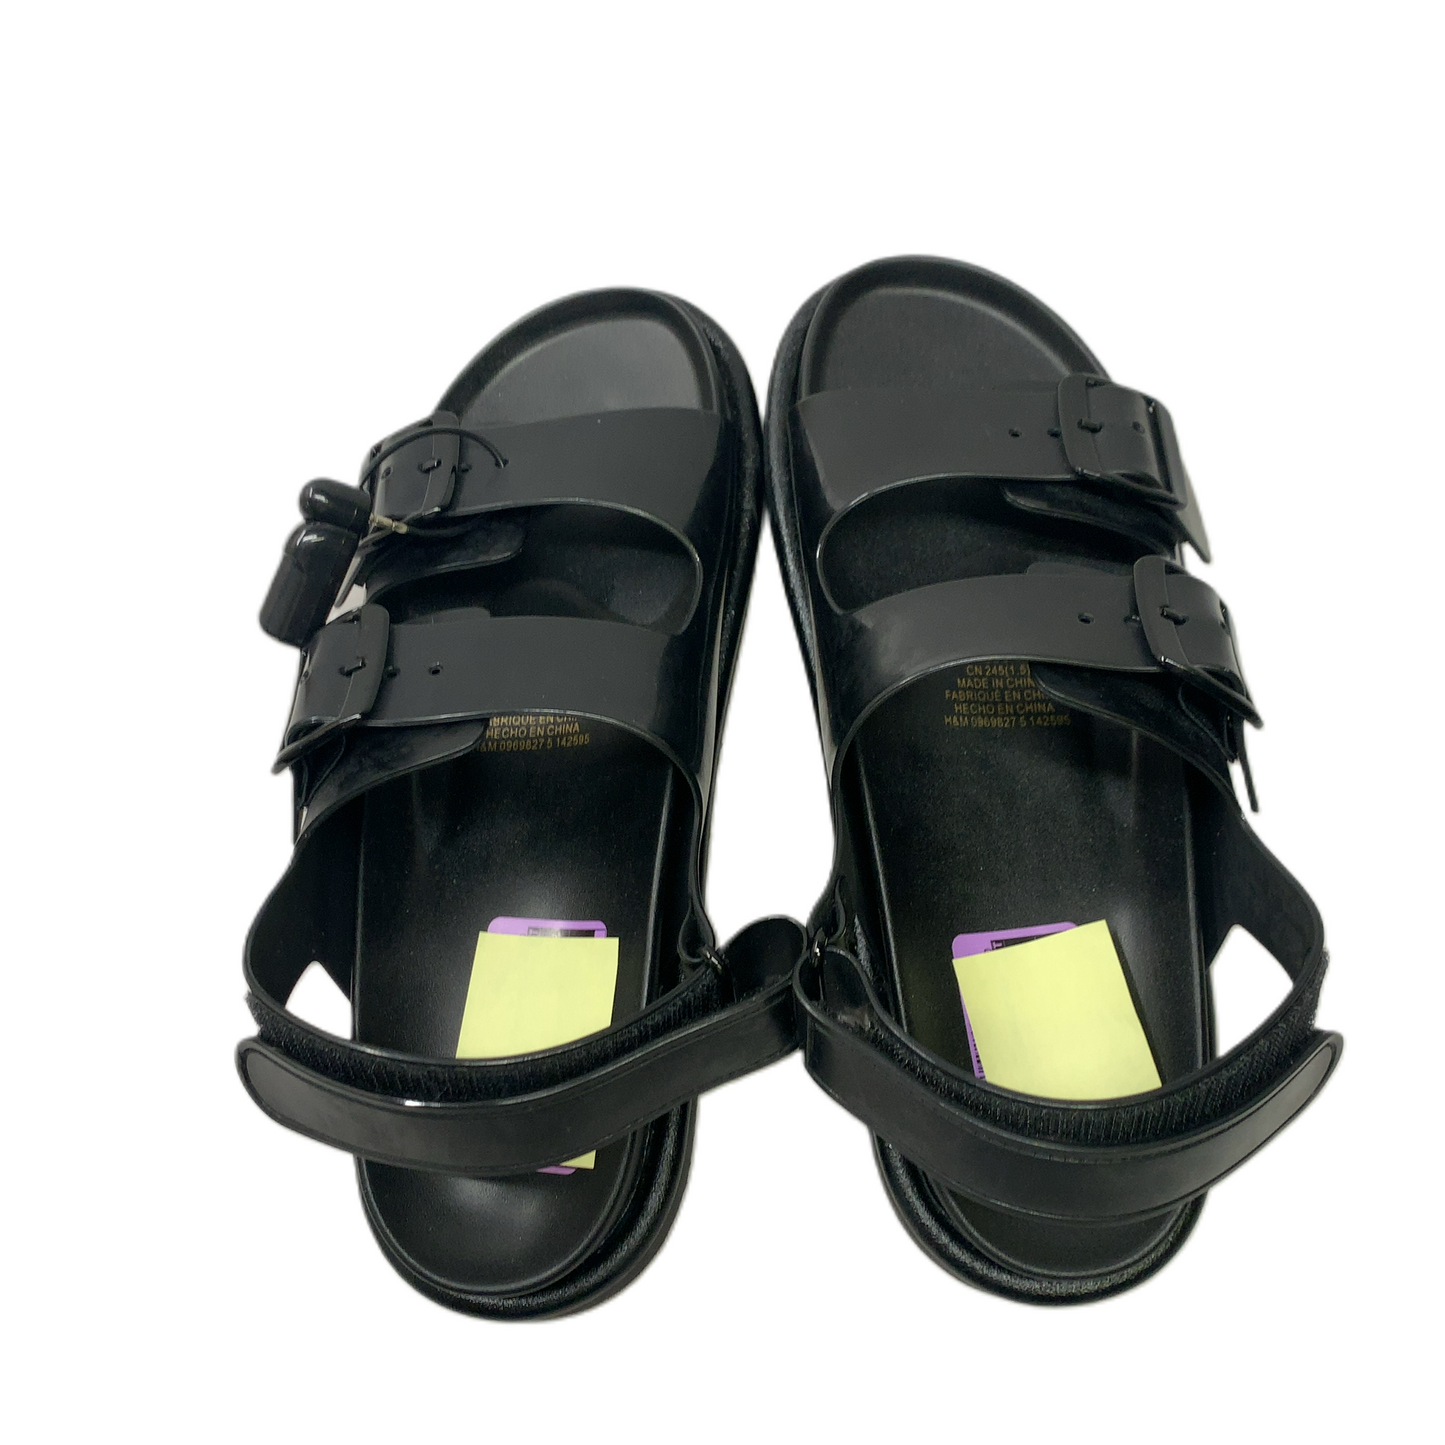 Sandals Heels Platform By H&m  Size: 8.5